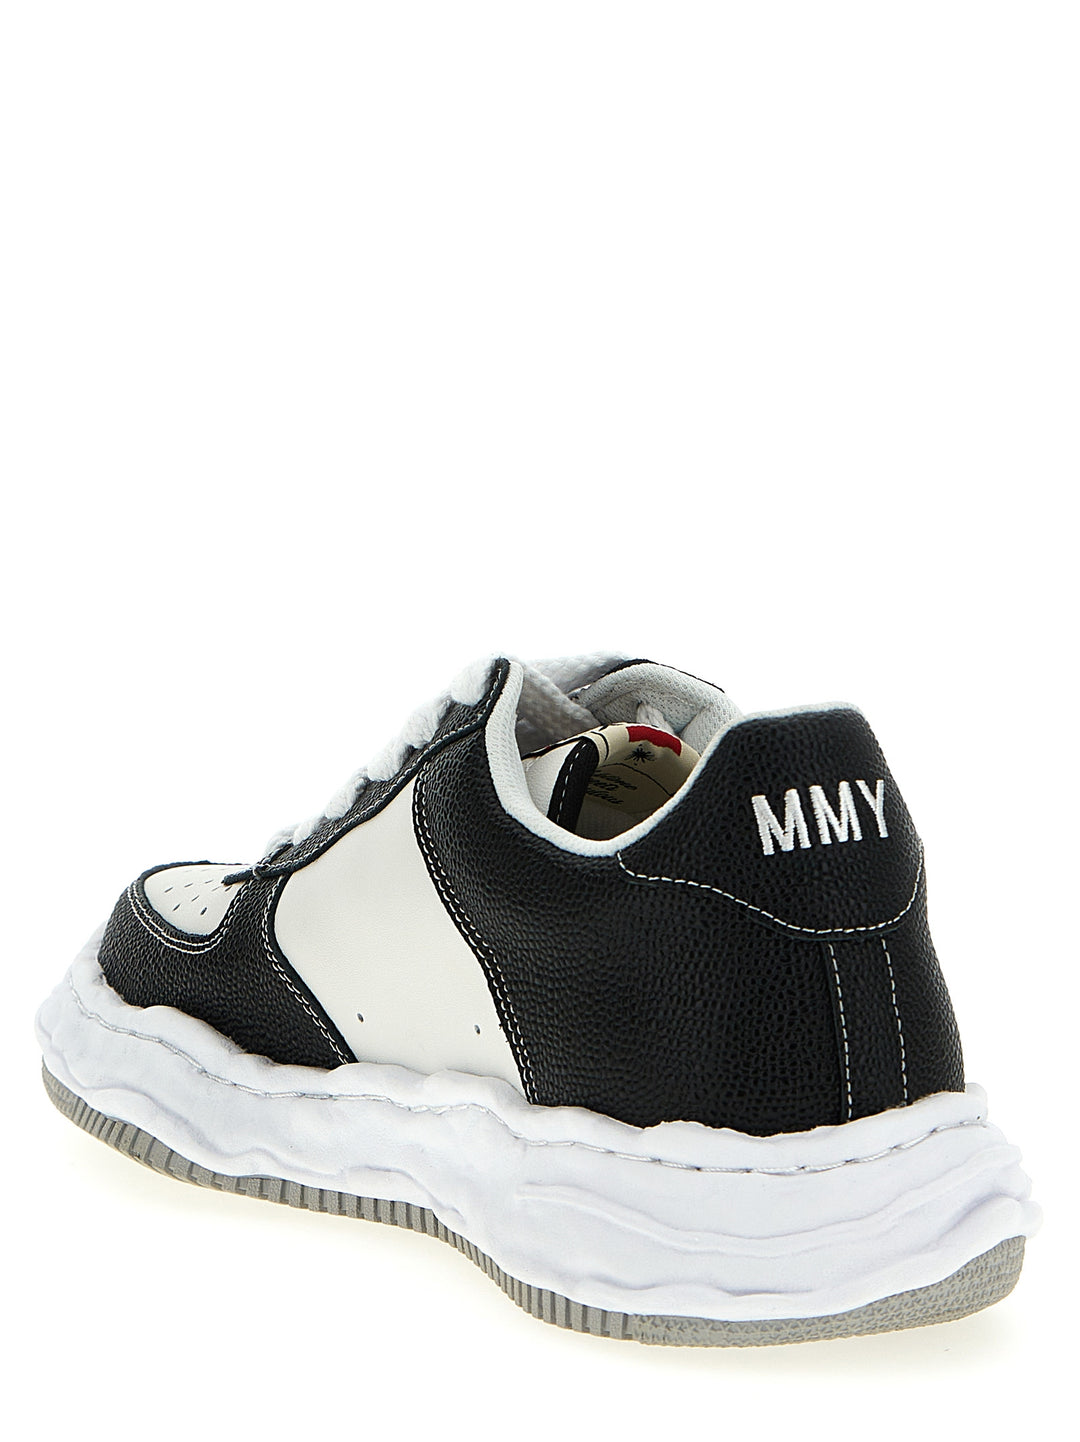 Wayne Sneakers Bianco/Nero